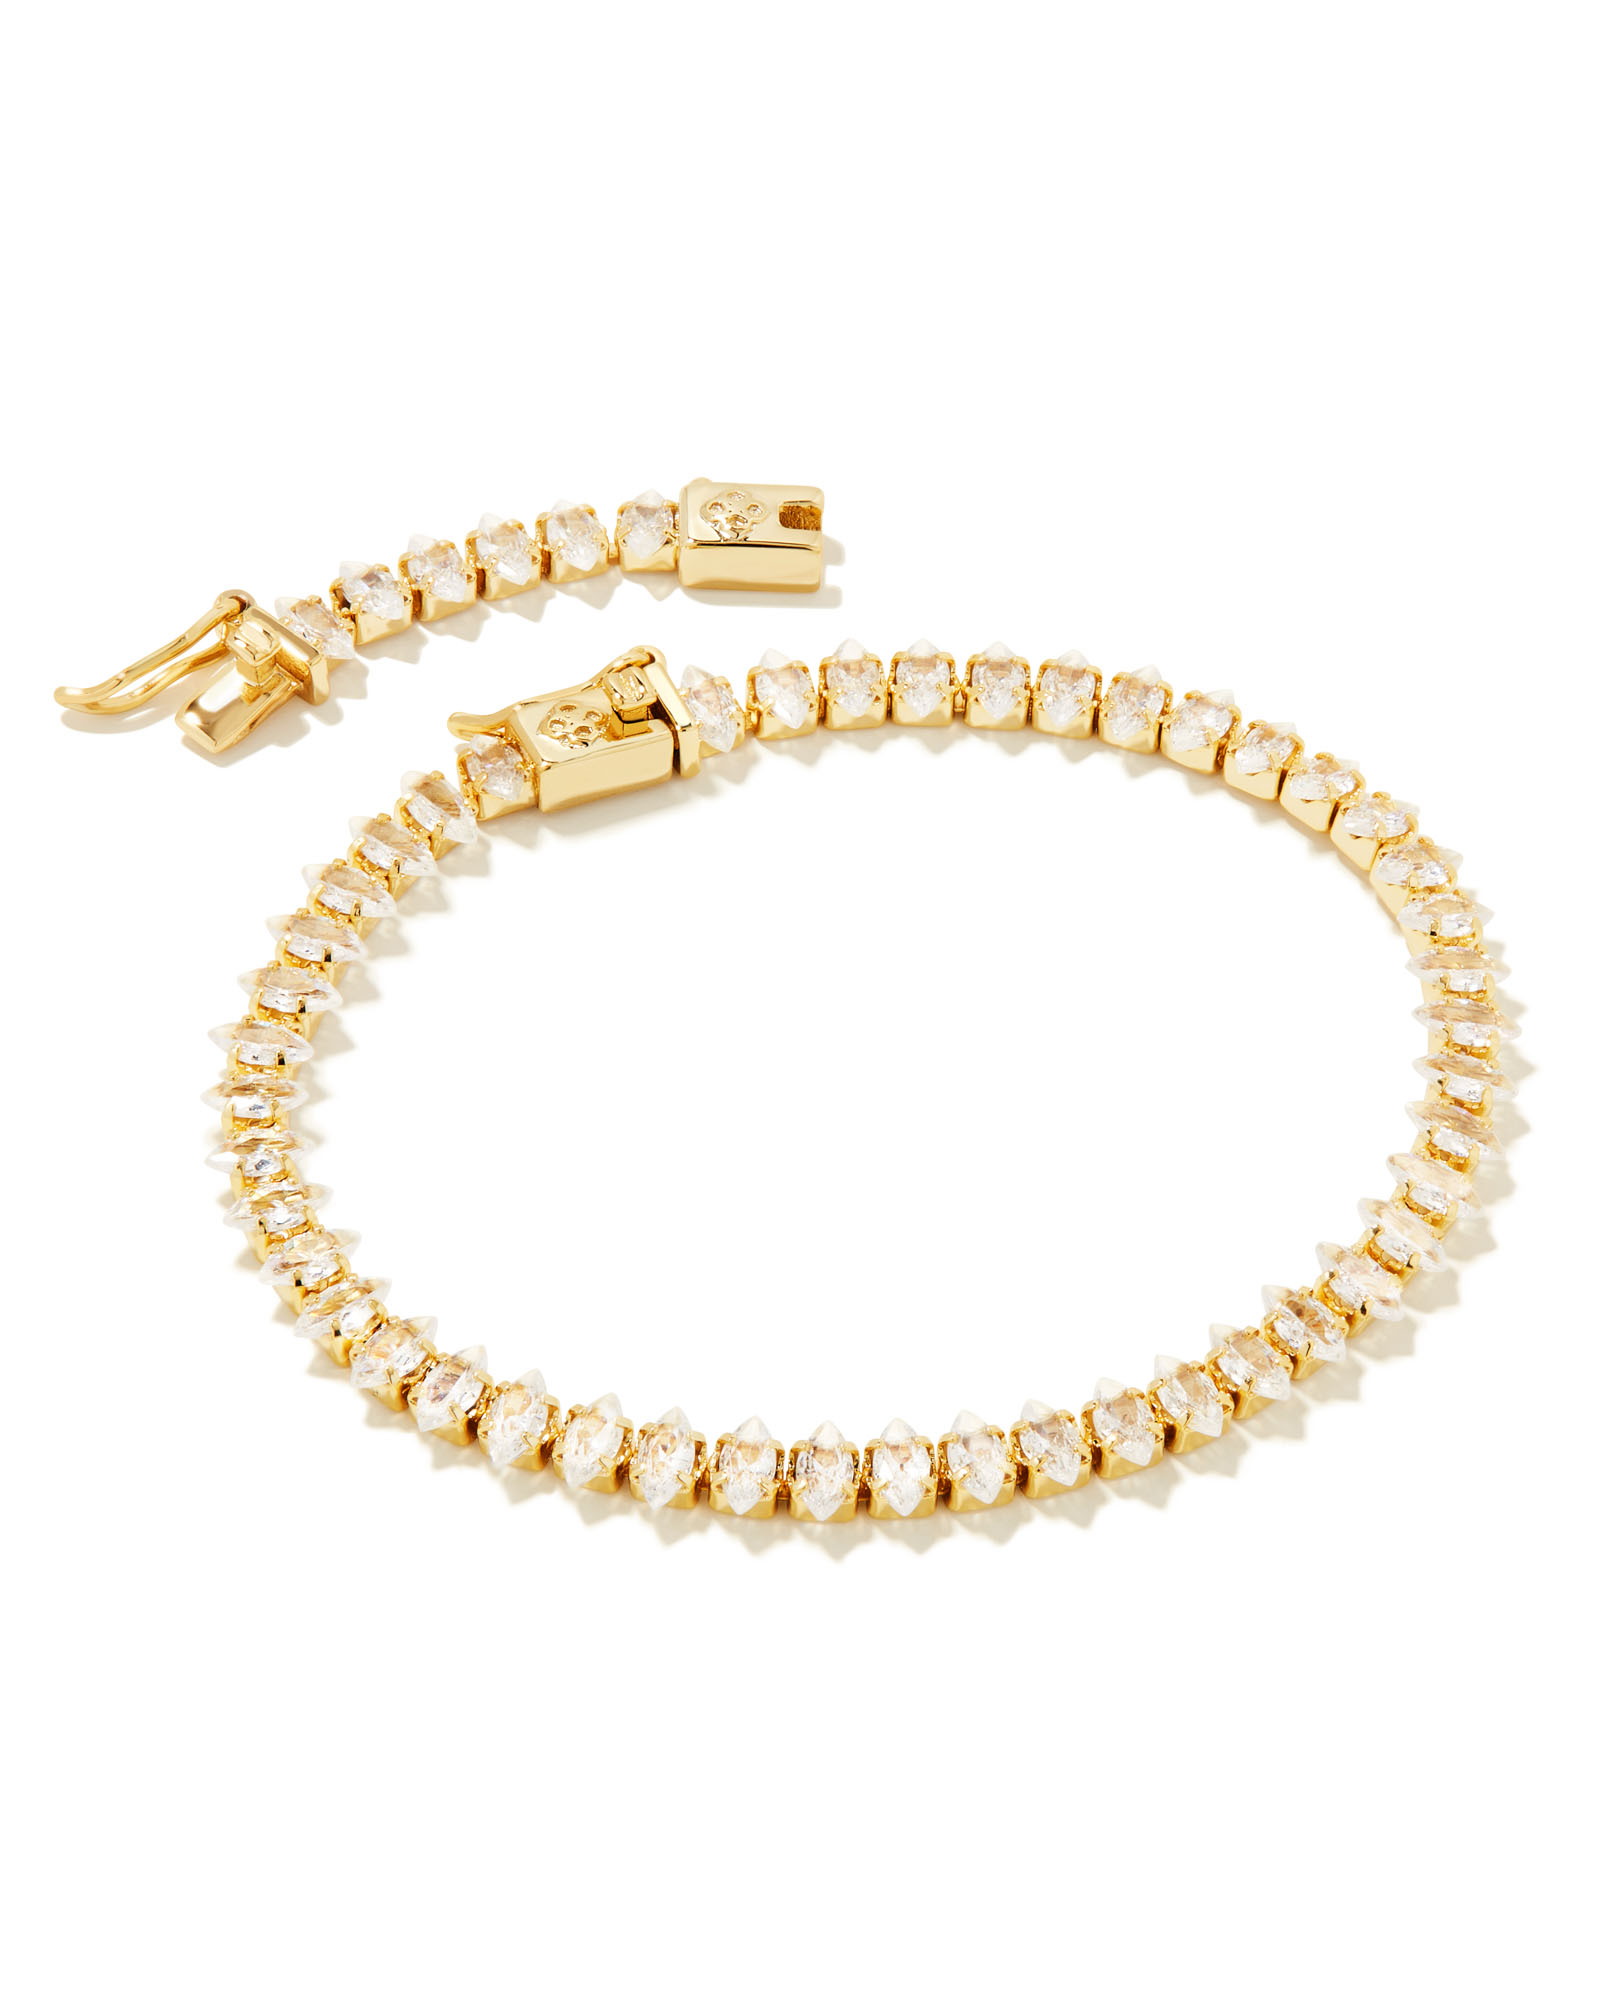 Buy 18k Gold Diamond Tennis Bracelet Yellow Gold Tennis Bracelet Online in  India  Etsy